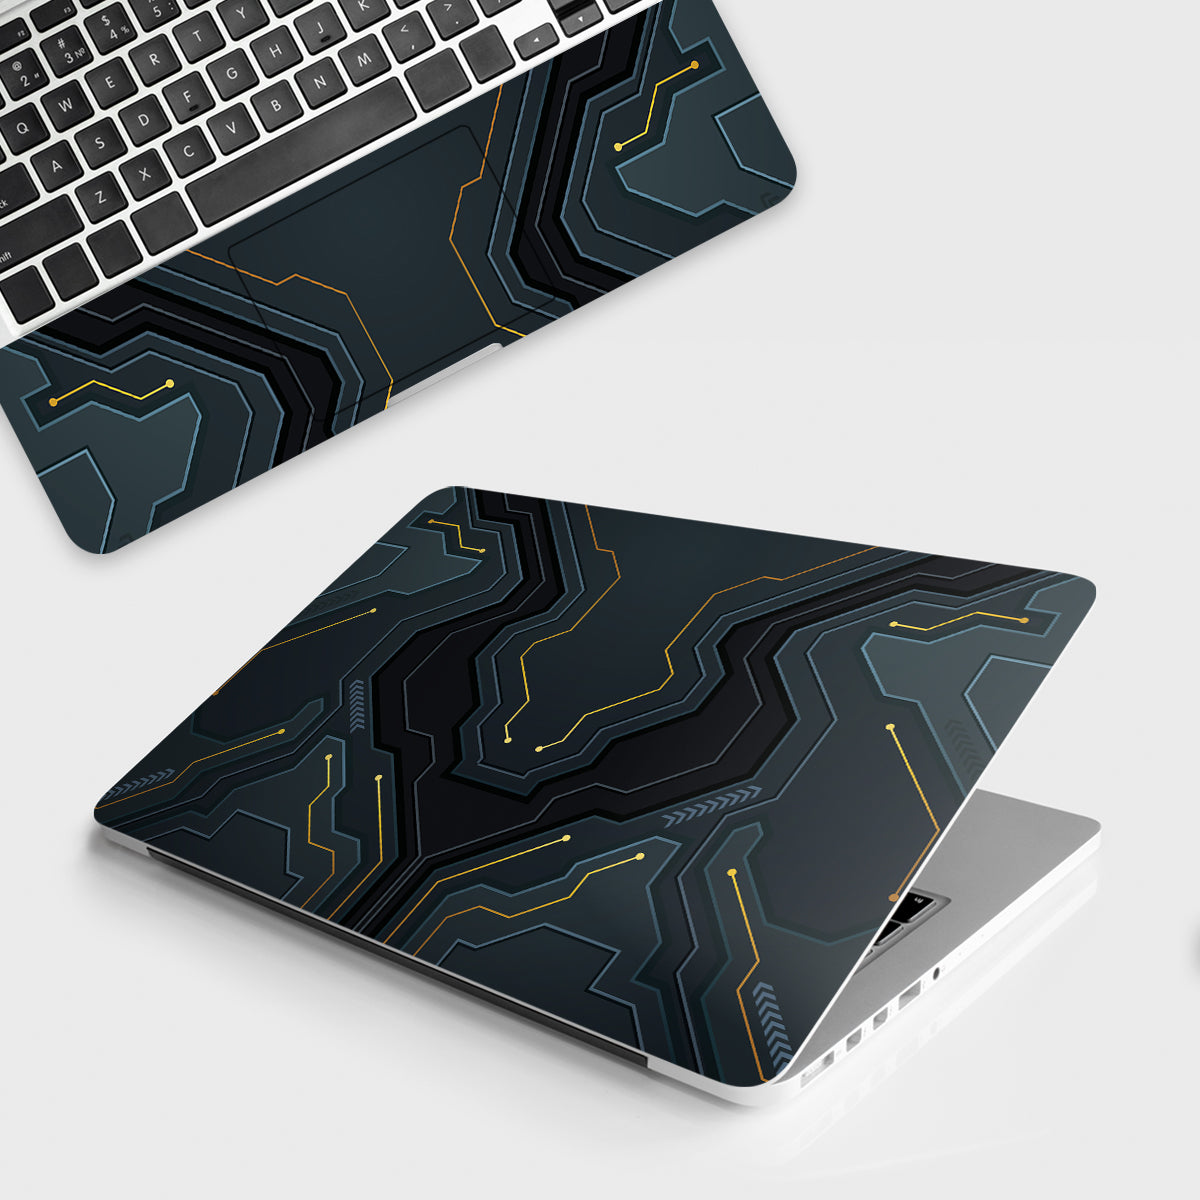 Fomo Store Laptop Skins Miscellaneous Futuristic Techno